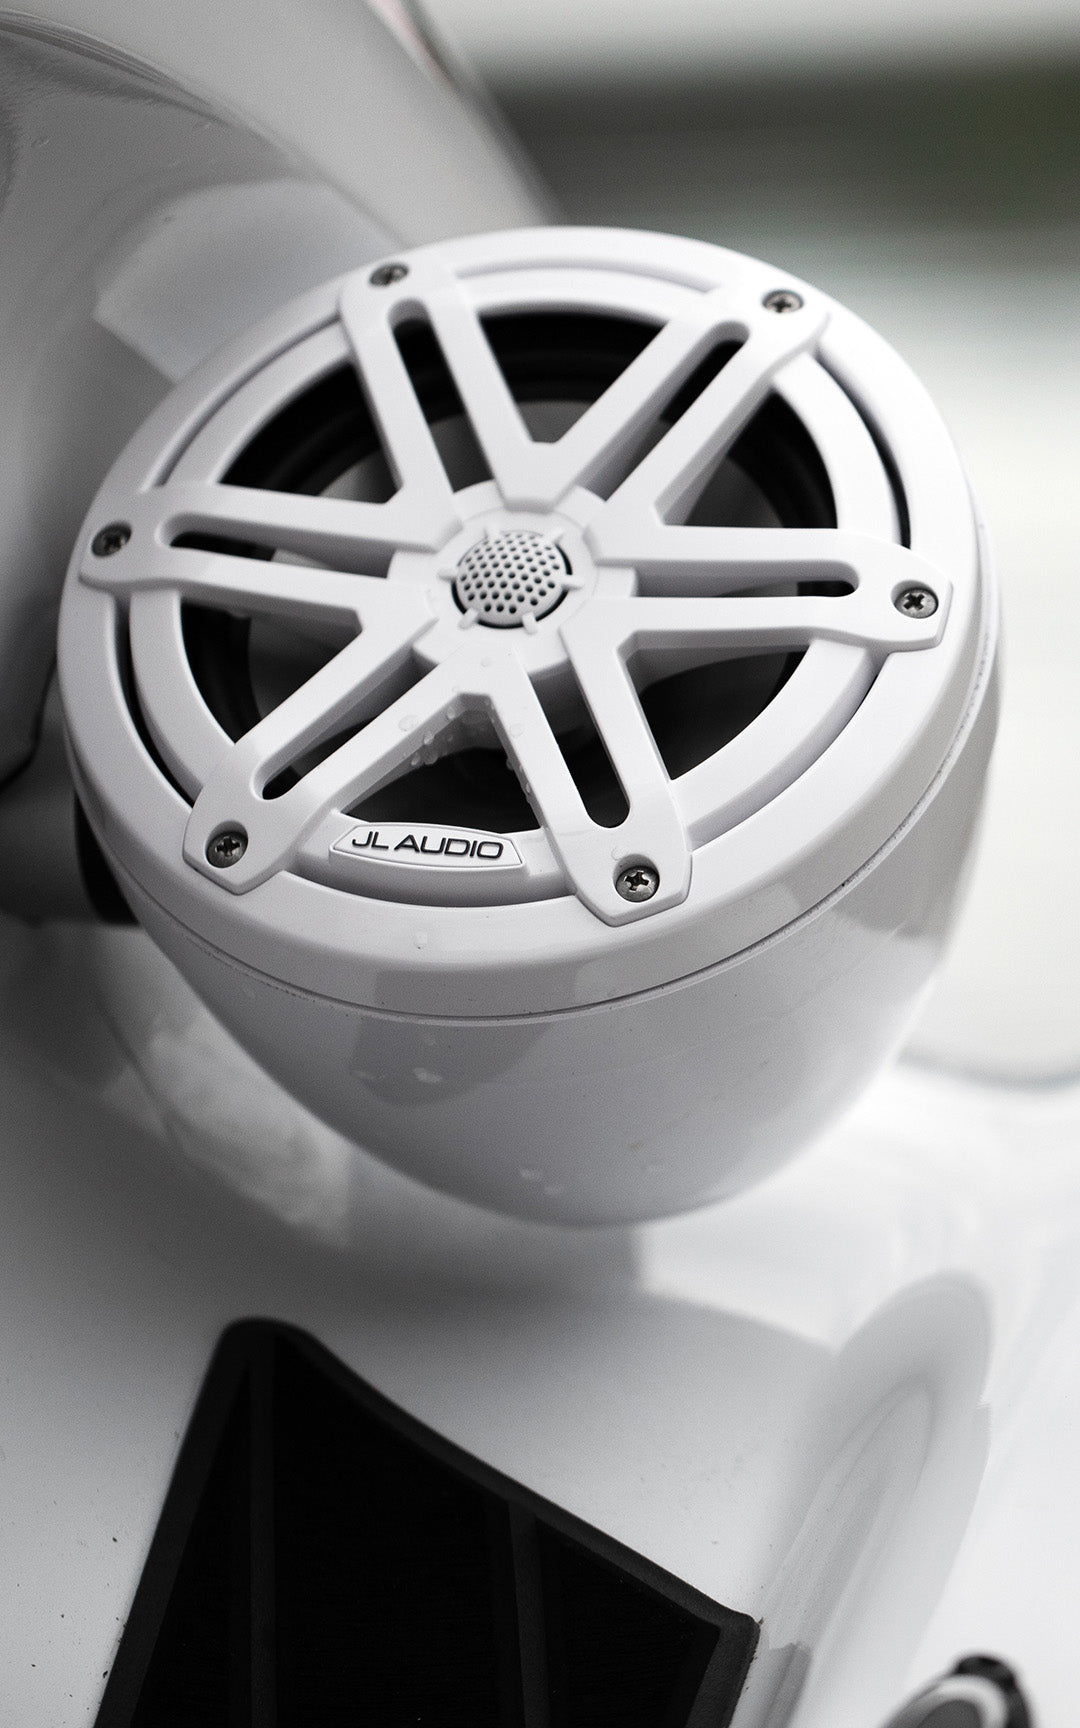 A closeup view of a white VeX Speaker unit installed on a jet ski.